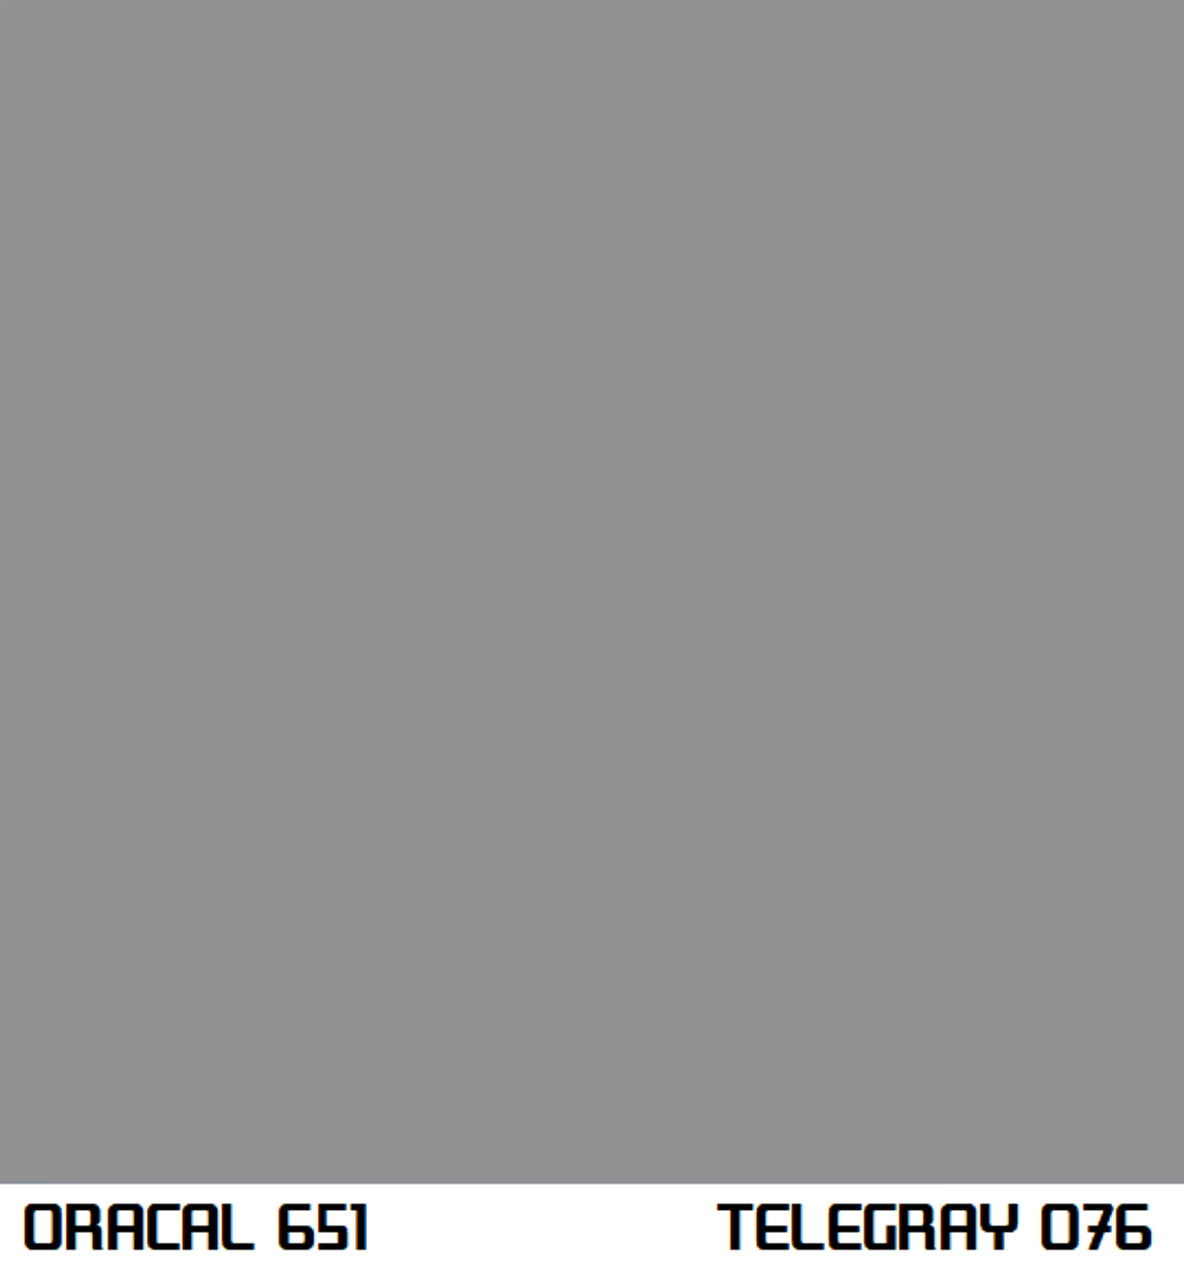 Oracal 651 Permanent Adhesive Vinyl Gloss - Telegray 076 - JDMFV WRAPS